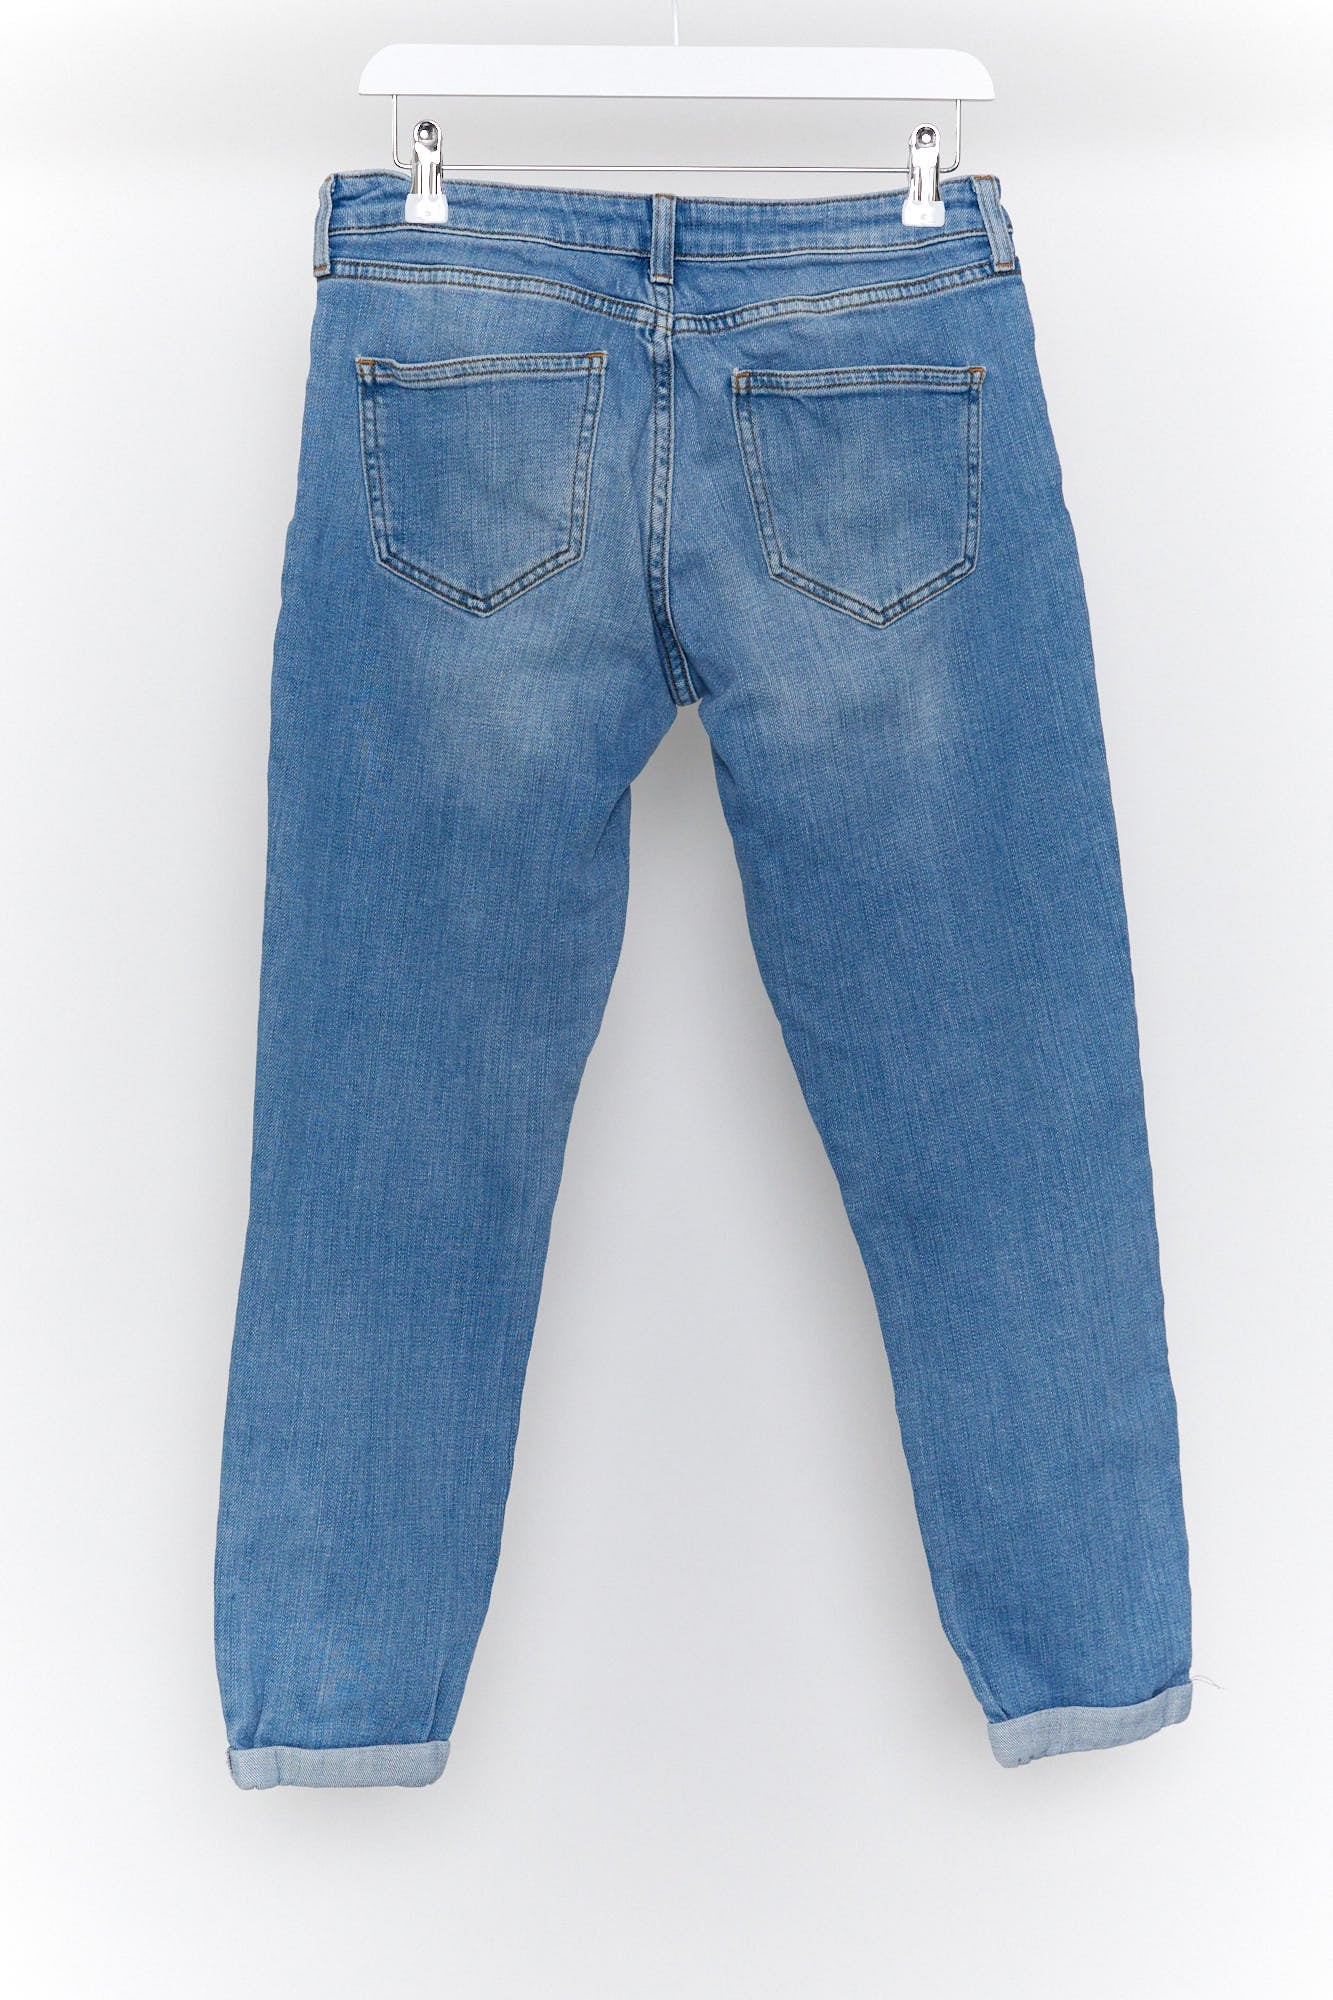 Womens blue Topshop jeans size 28